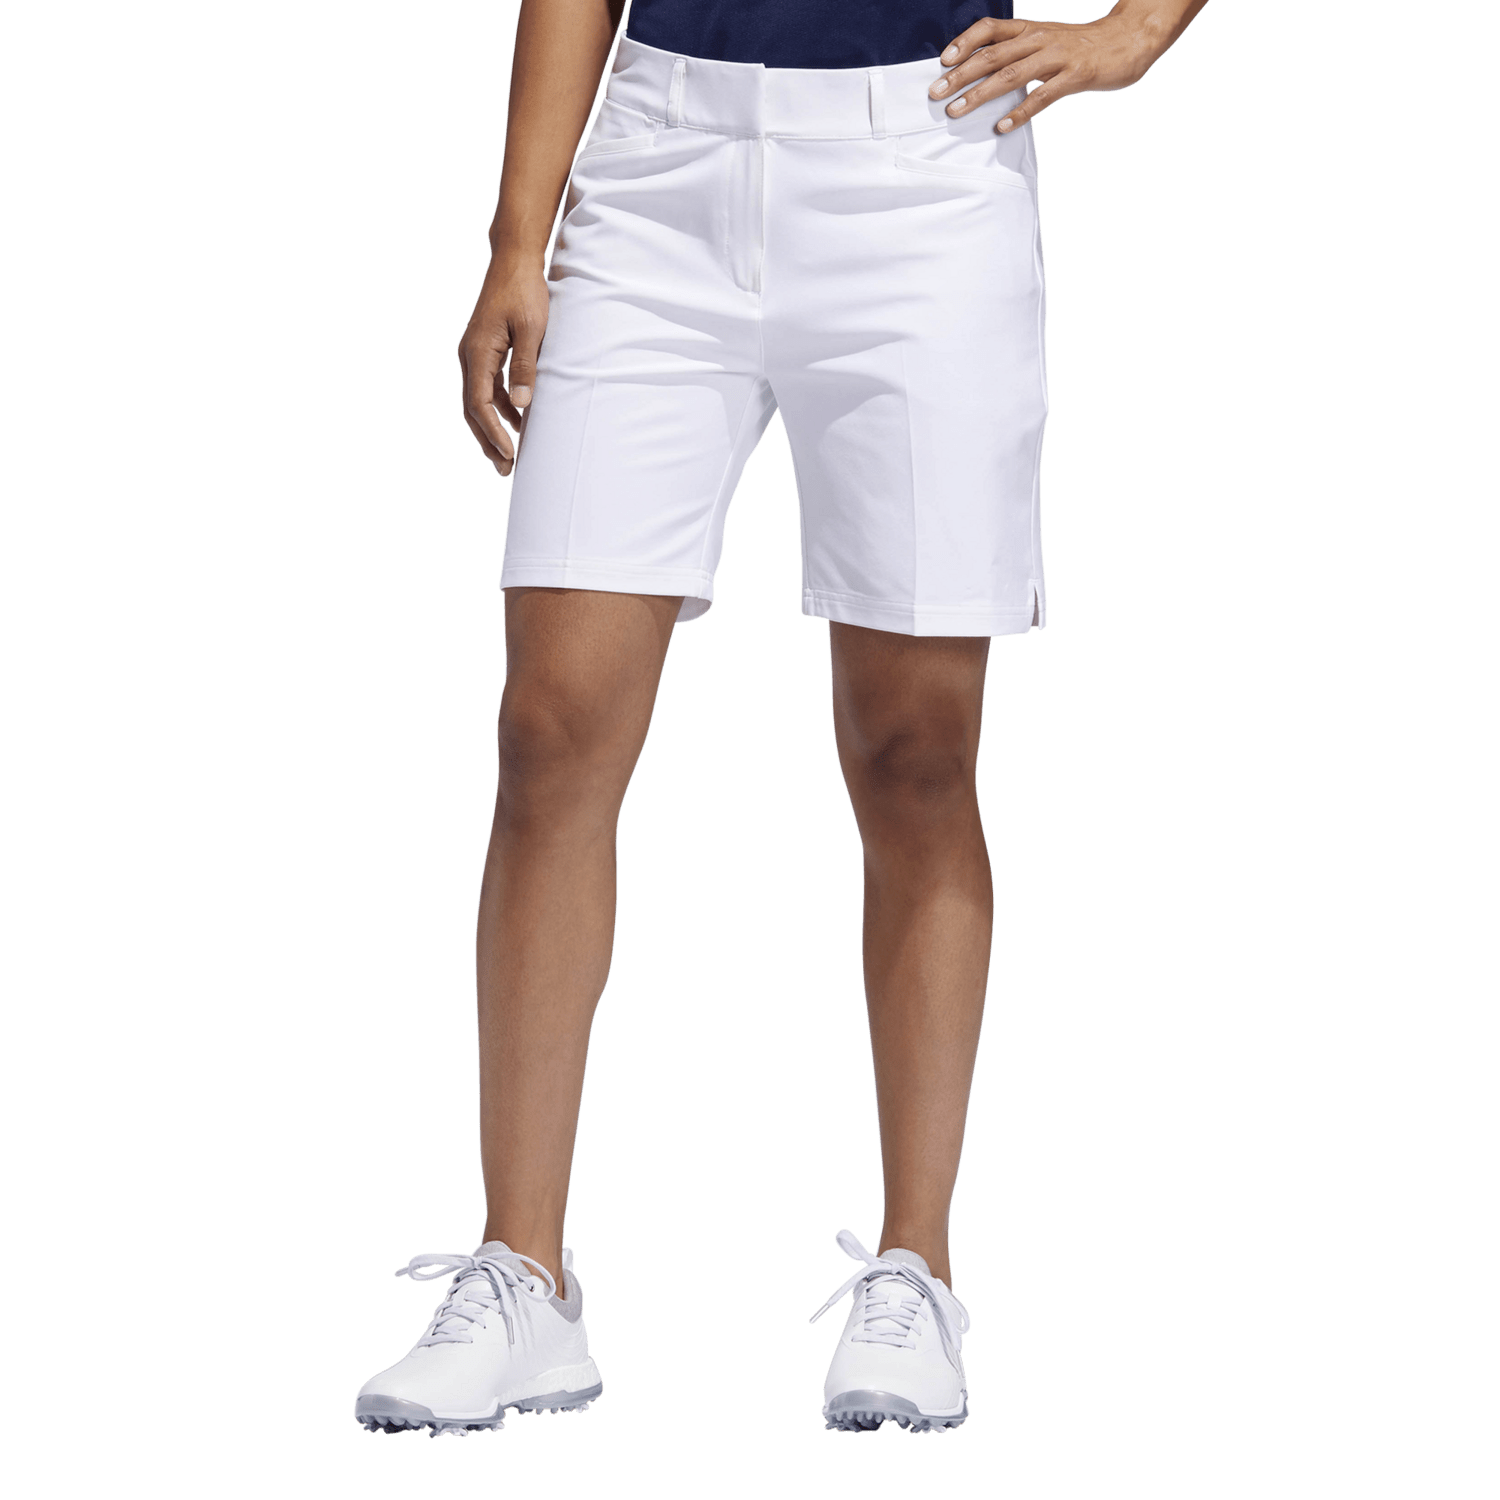 nike womens golf shorts